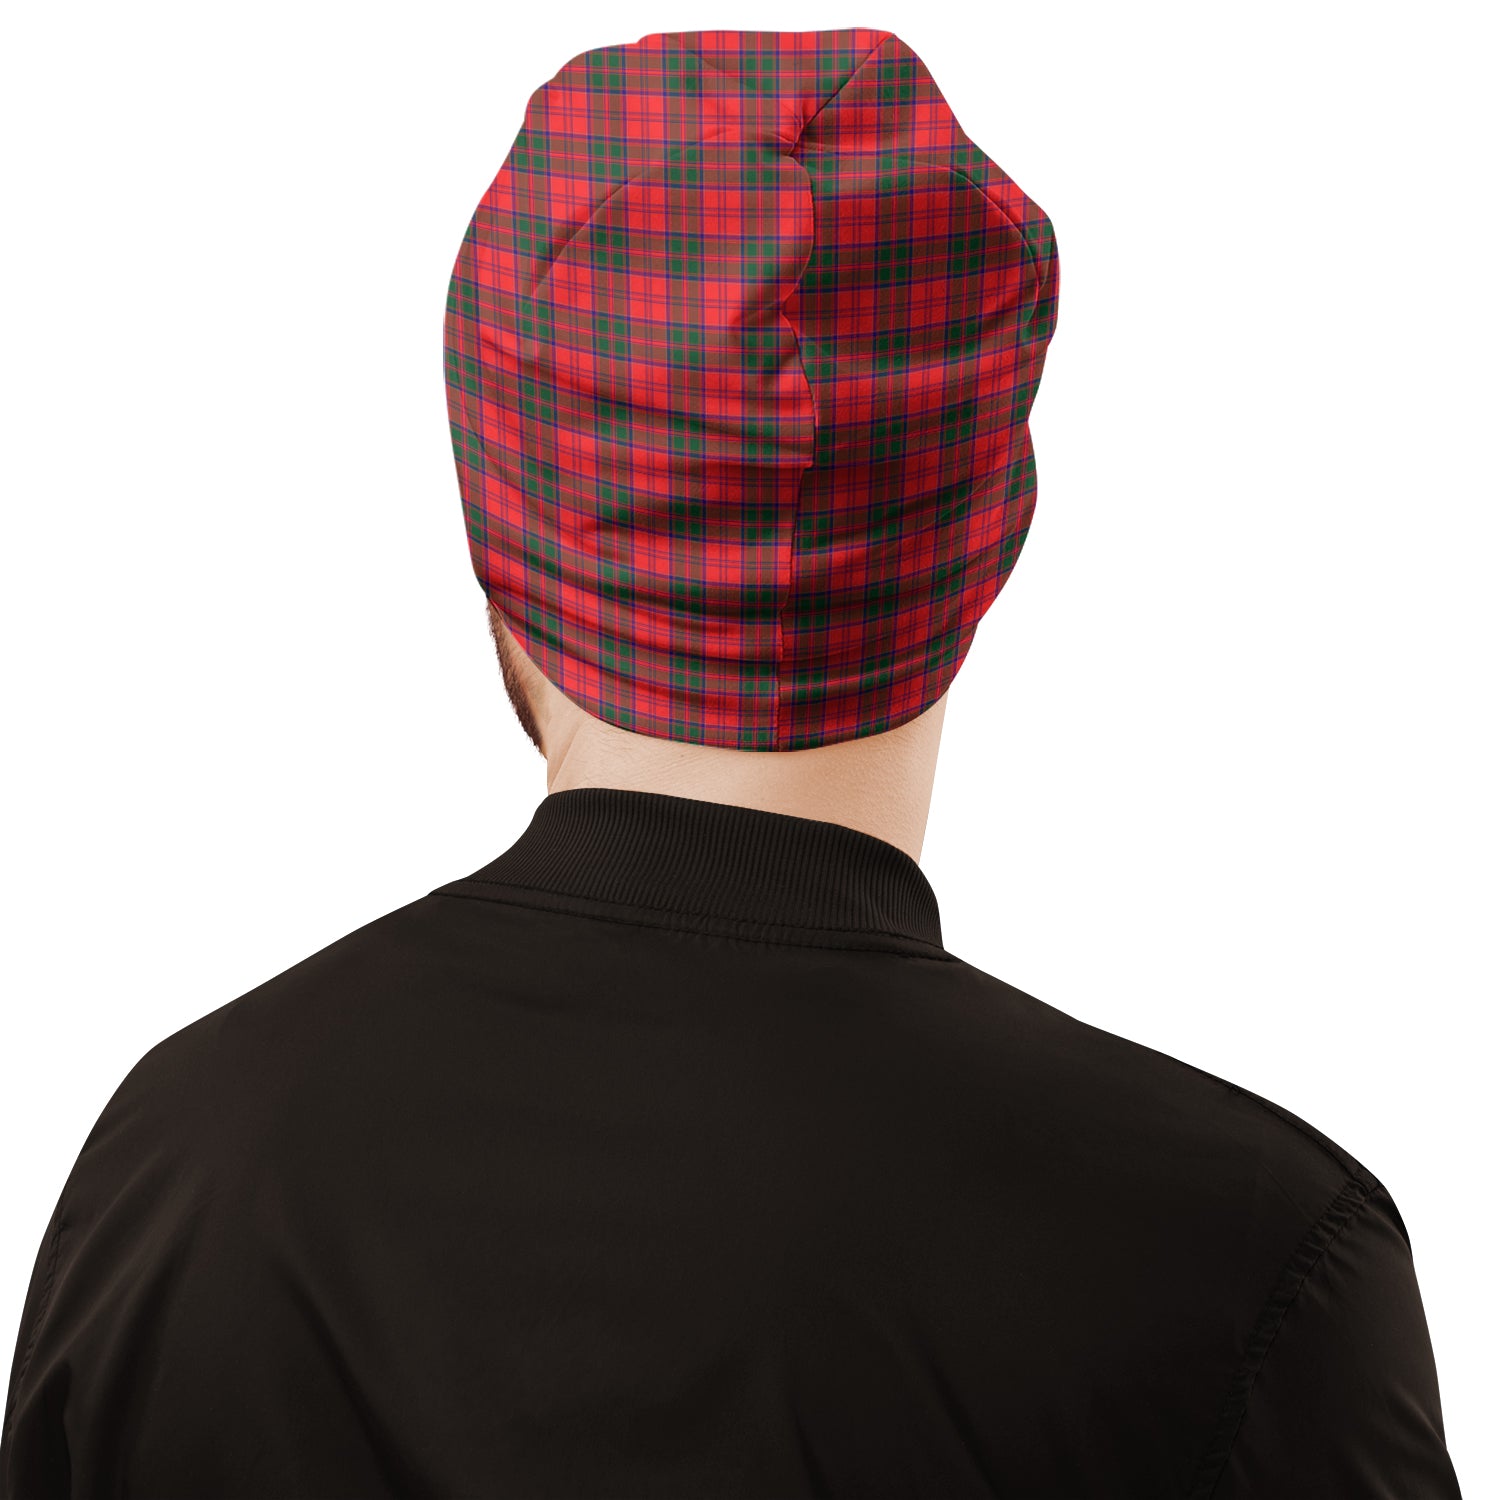 drummond-modern-tartan-beanies-hat-with-family-crest